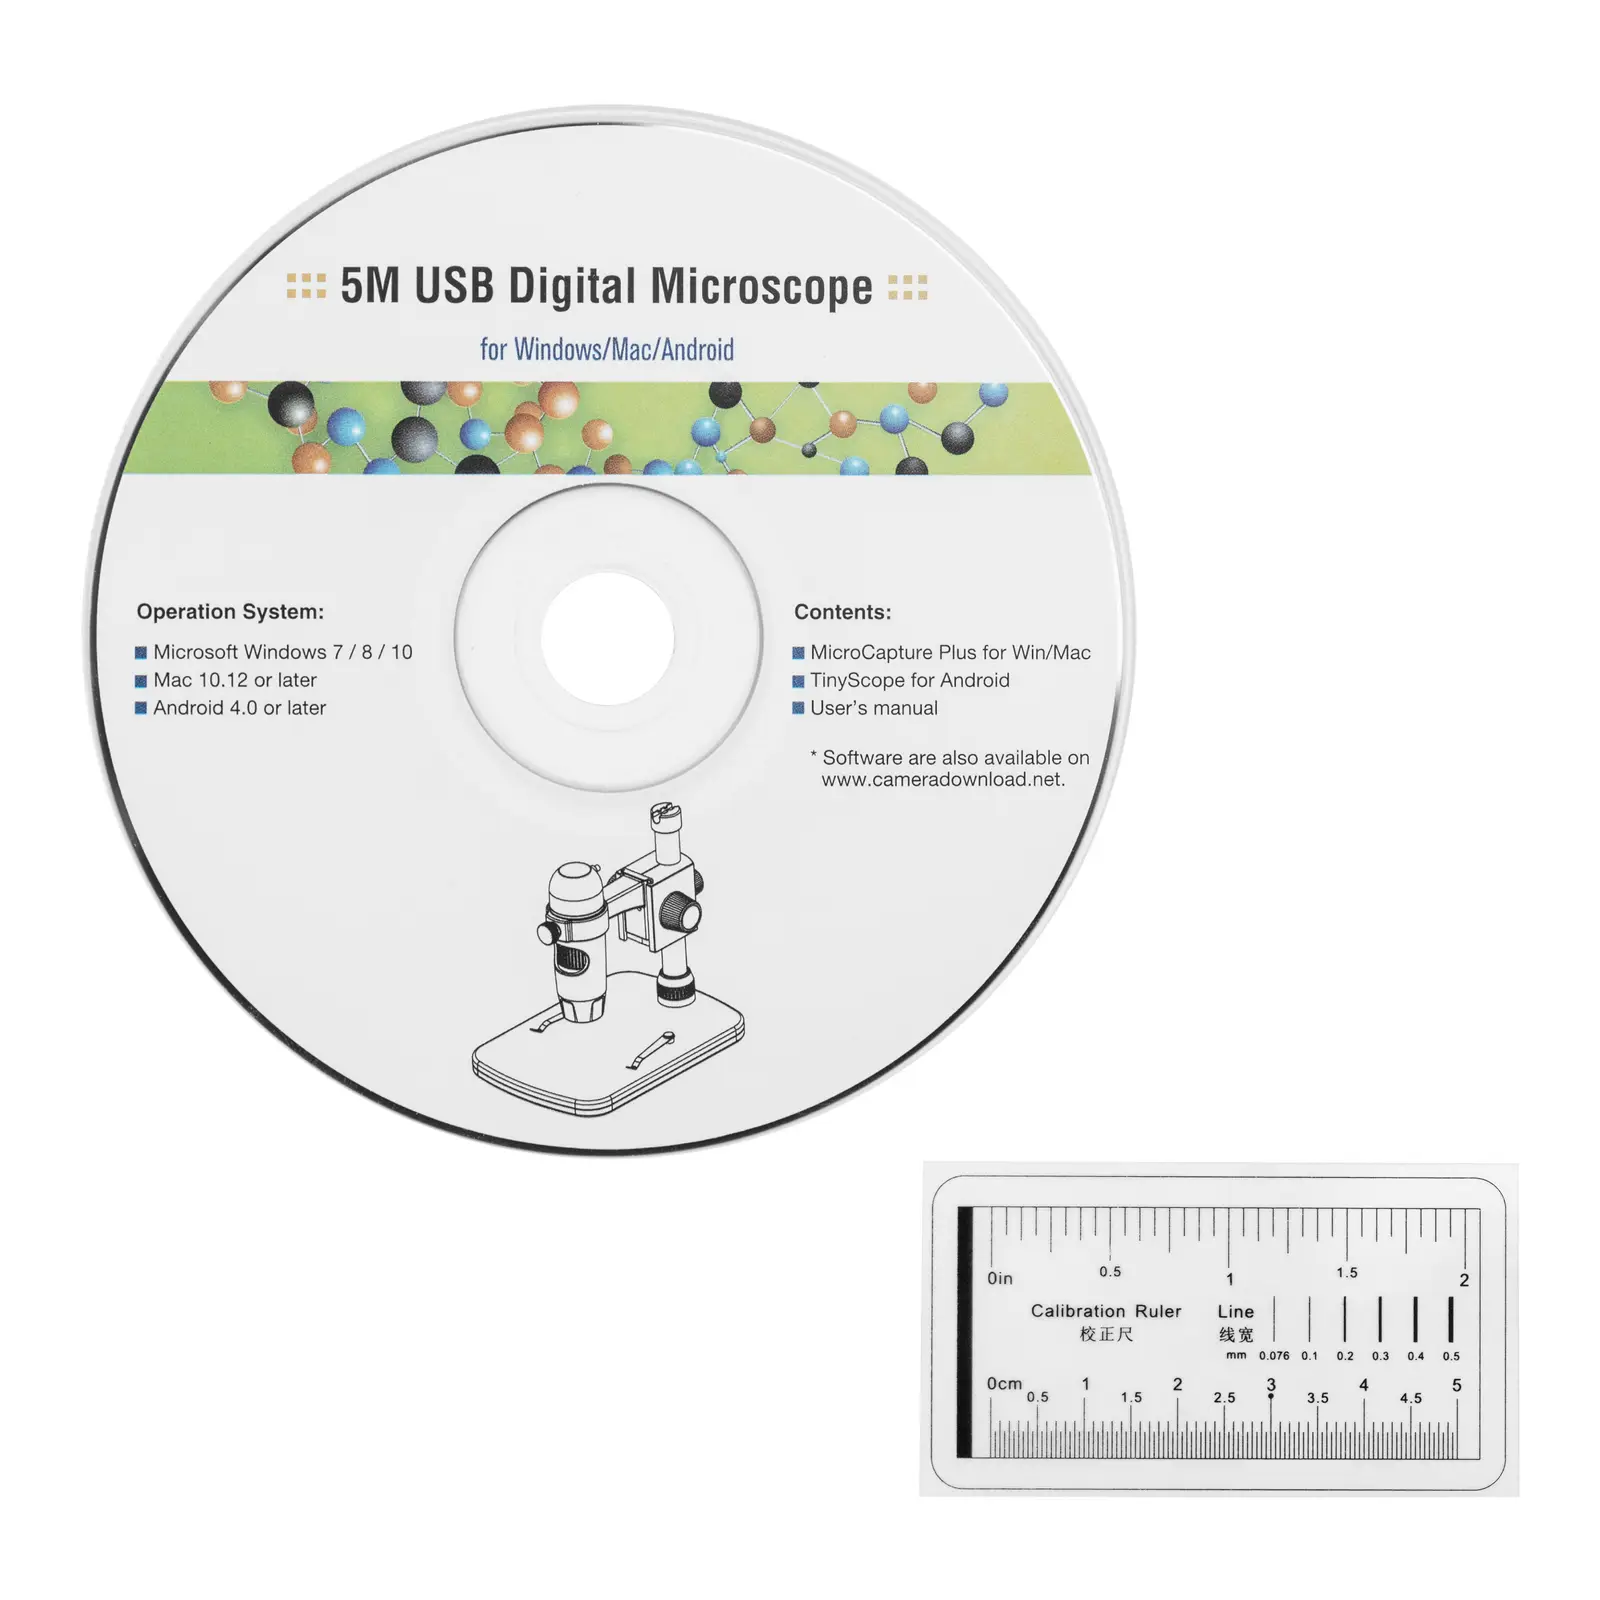 Digital Microscope - 10 - 300x - LED incident light - USB